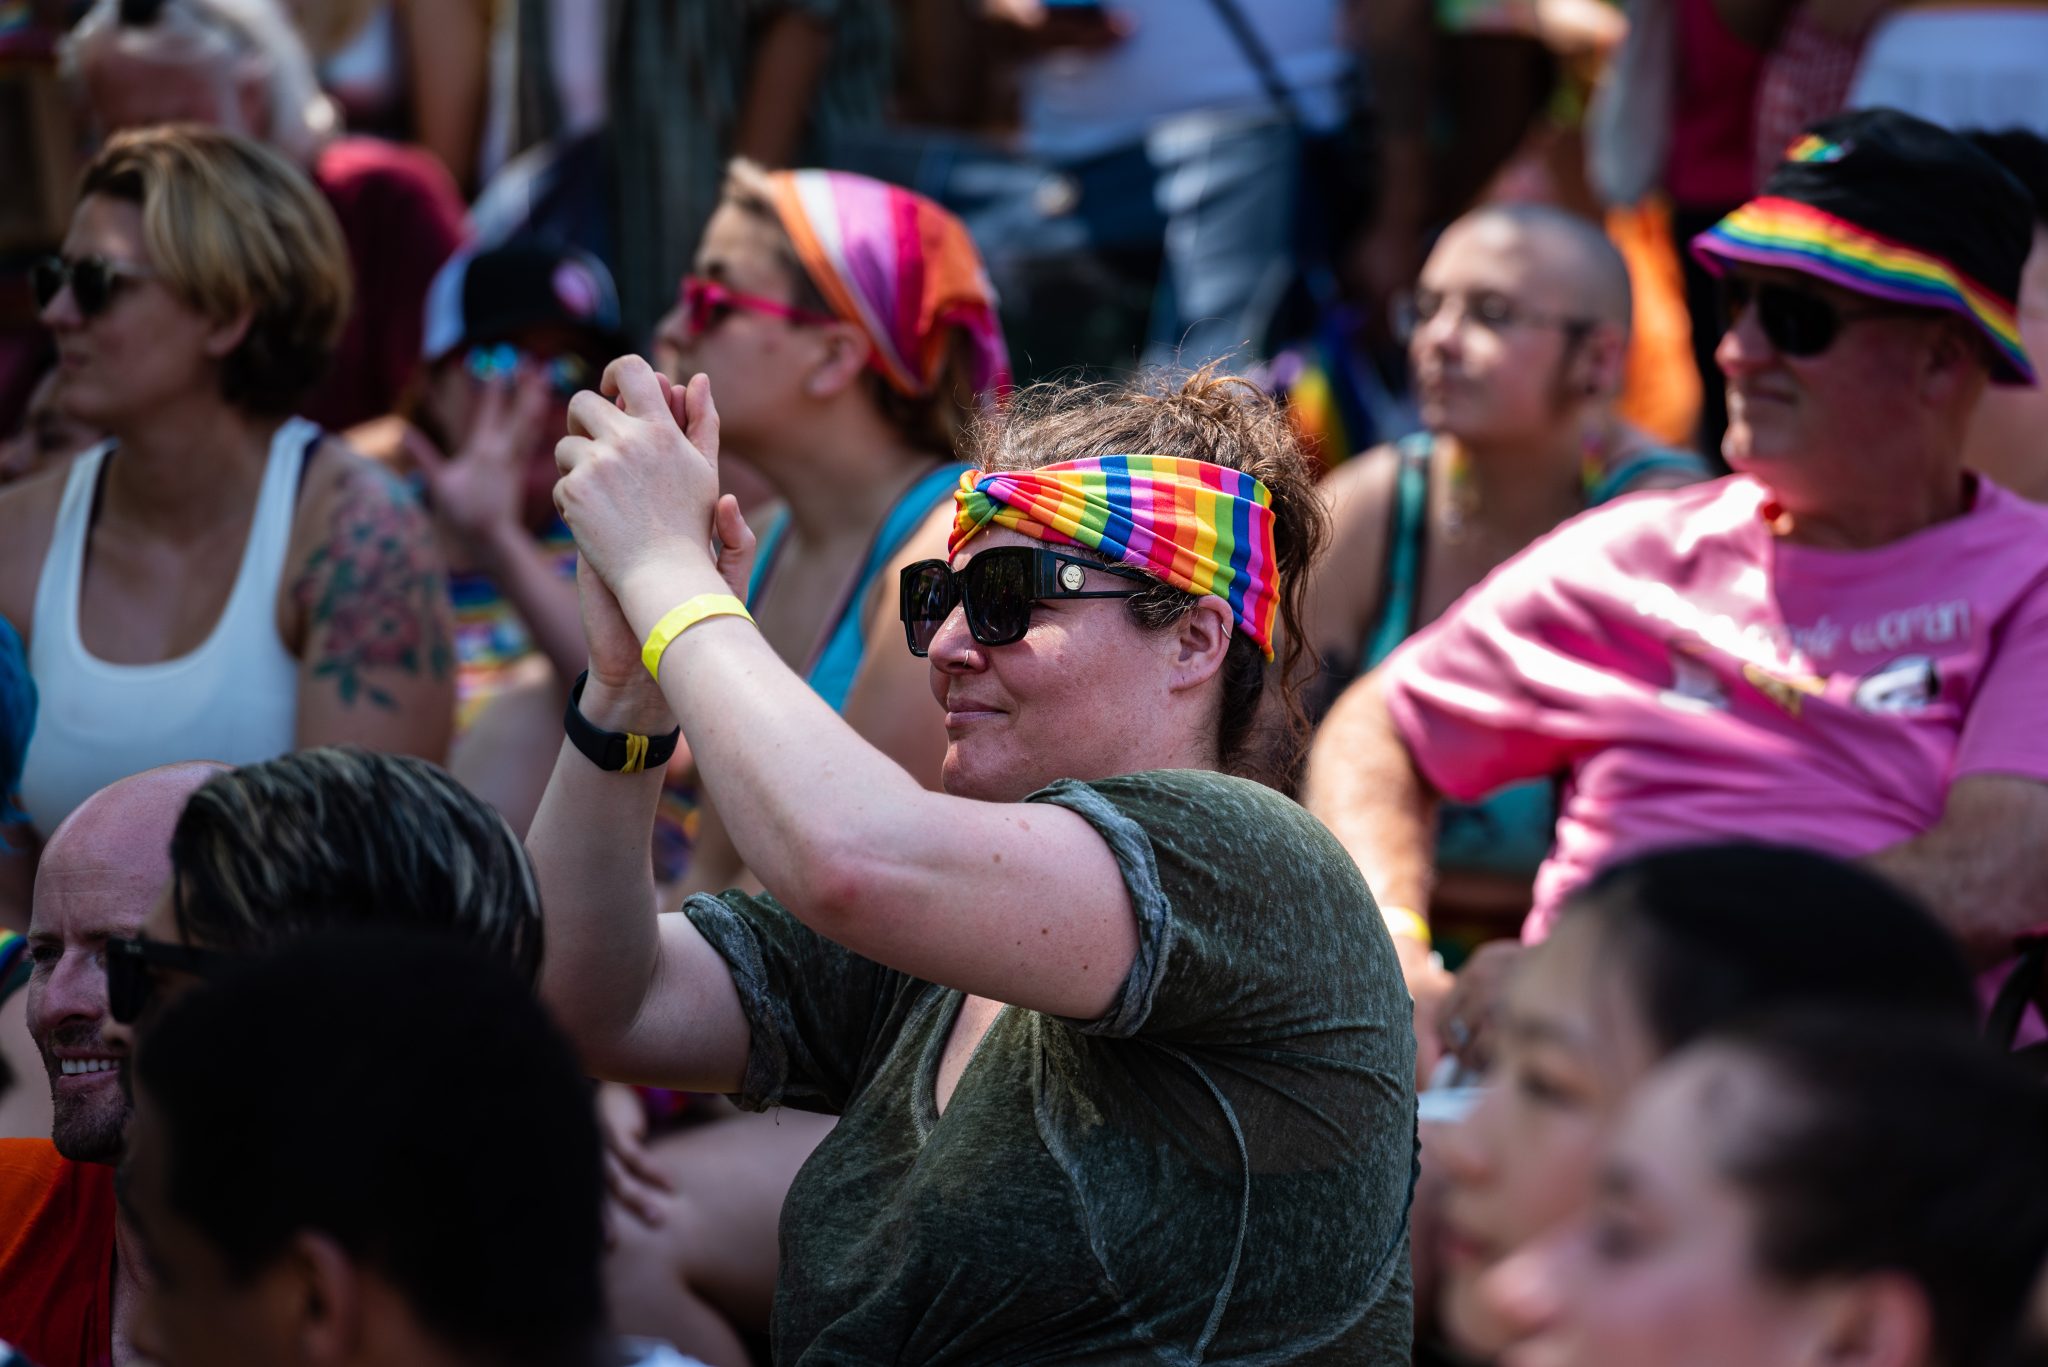 rainbow headband, fan, clapping, davis pride, davis, california, pride month, gay community, event, chris allan, freelance photojournalist, news photography, lgbtq, event, colorful